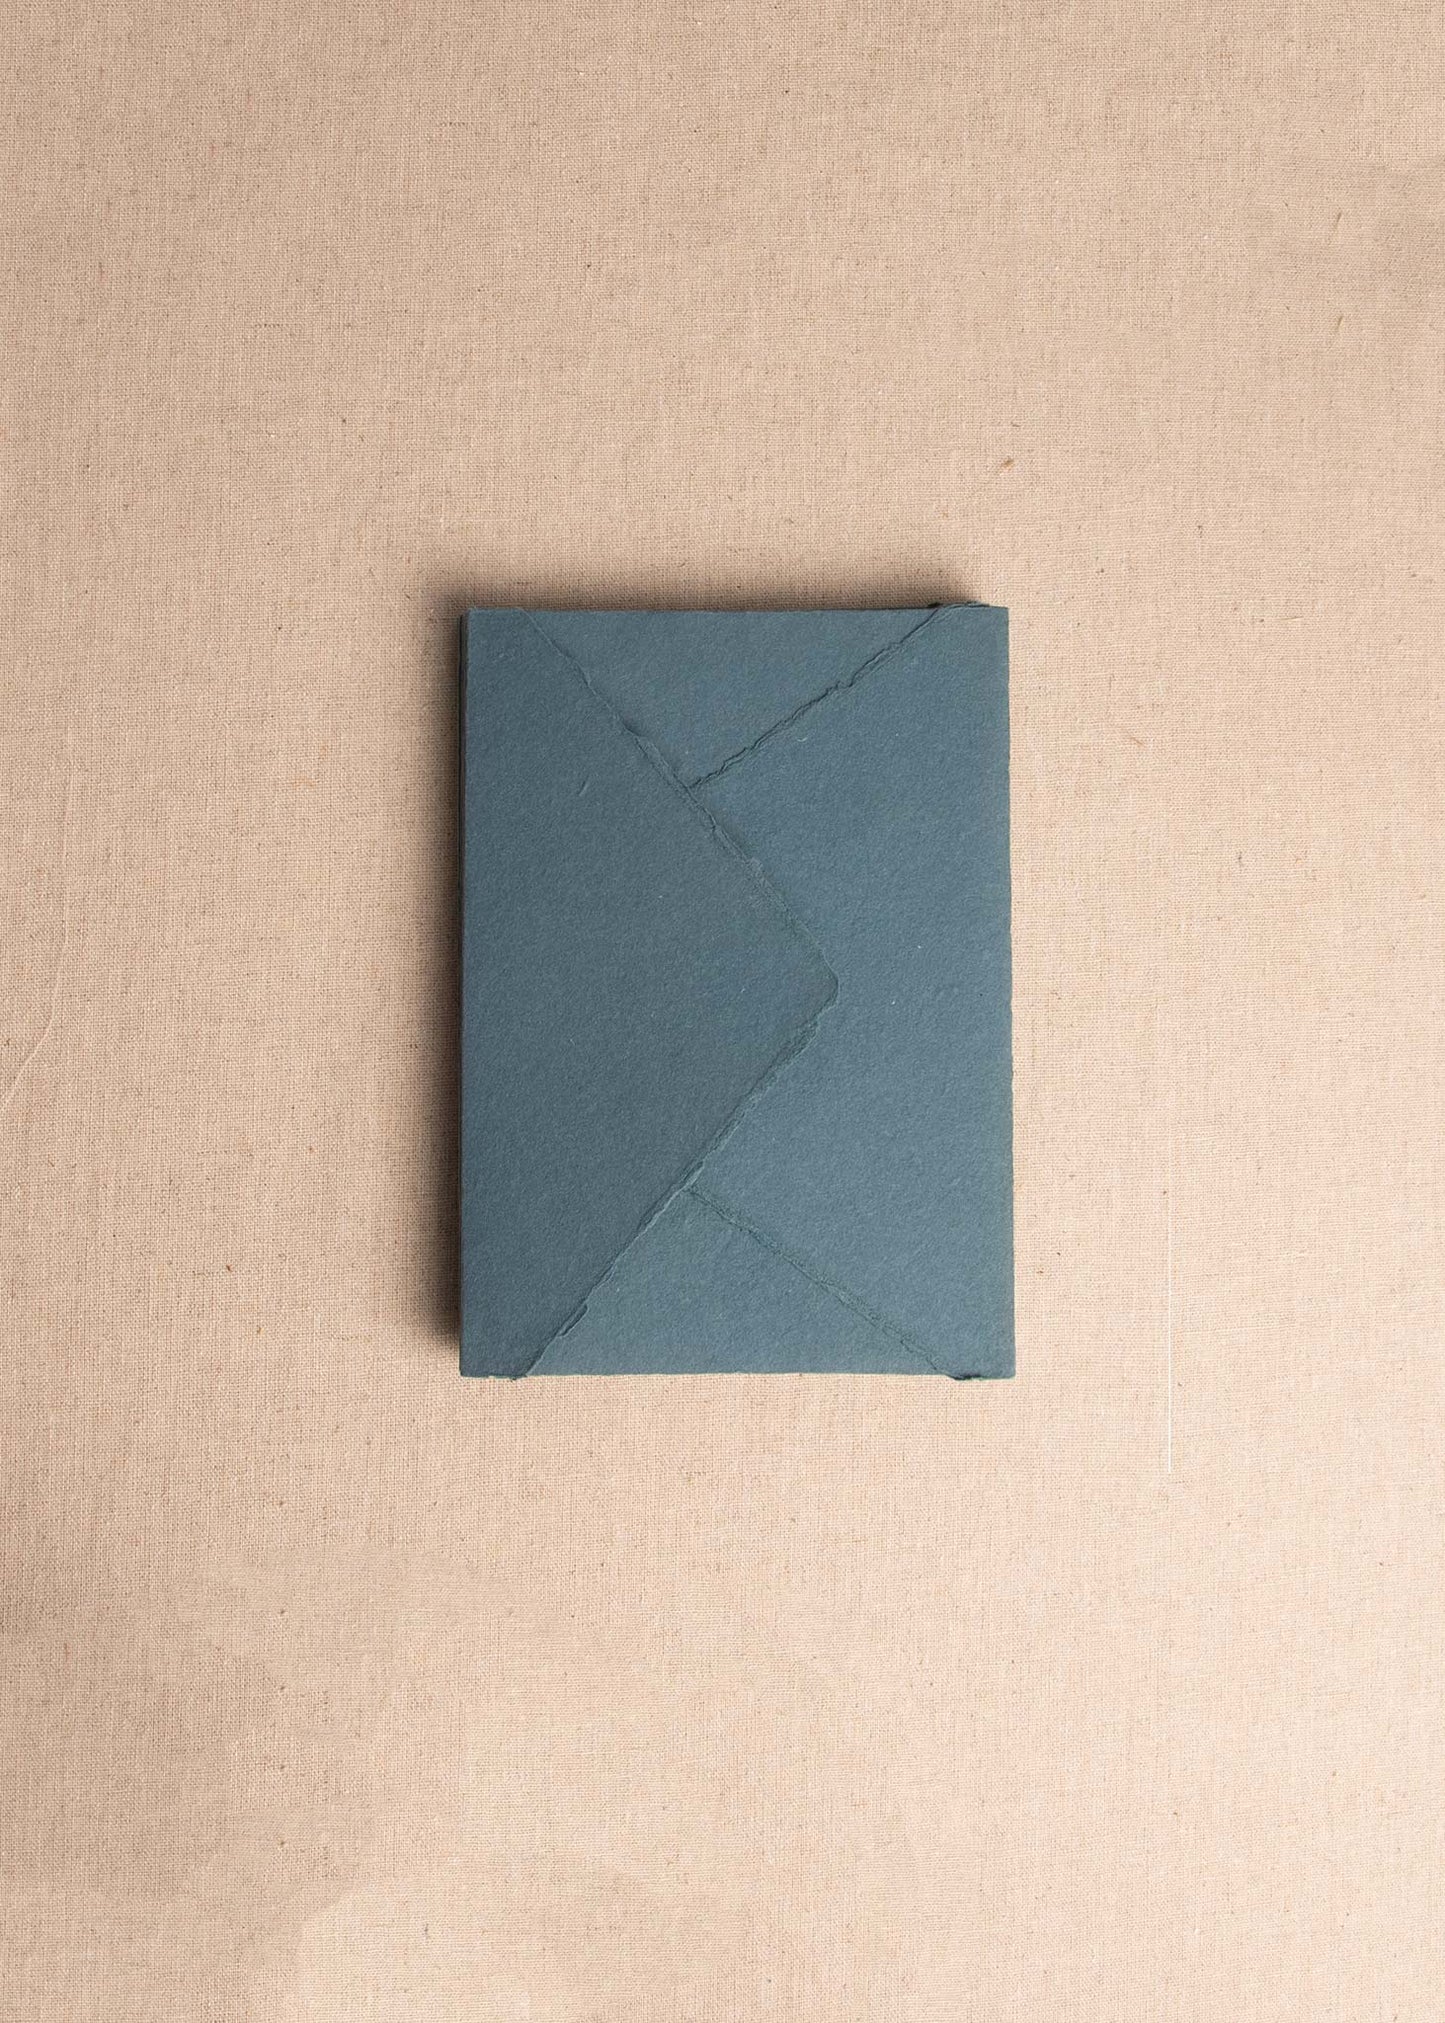 Singular 5x7 inch Teal Handmade paper envelope with deckle edge on linen background